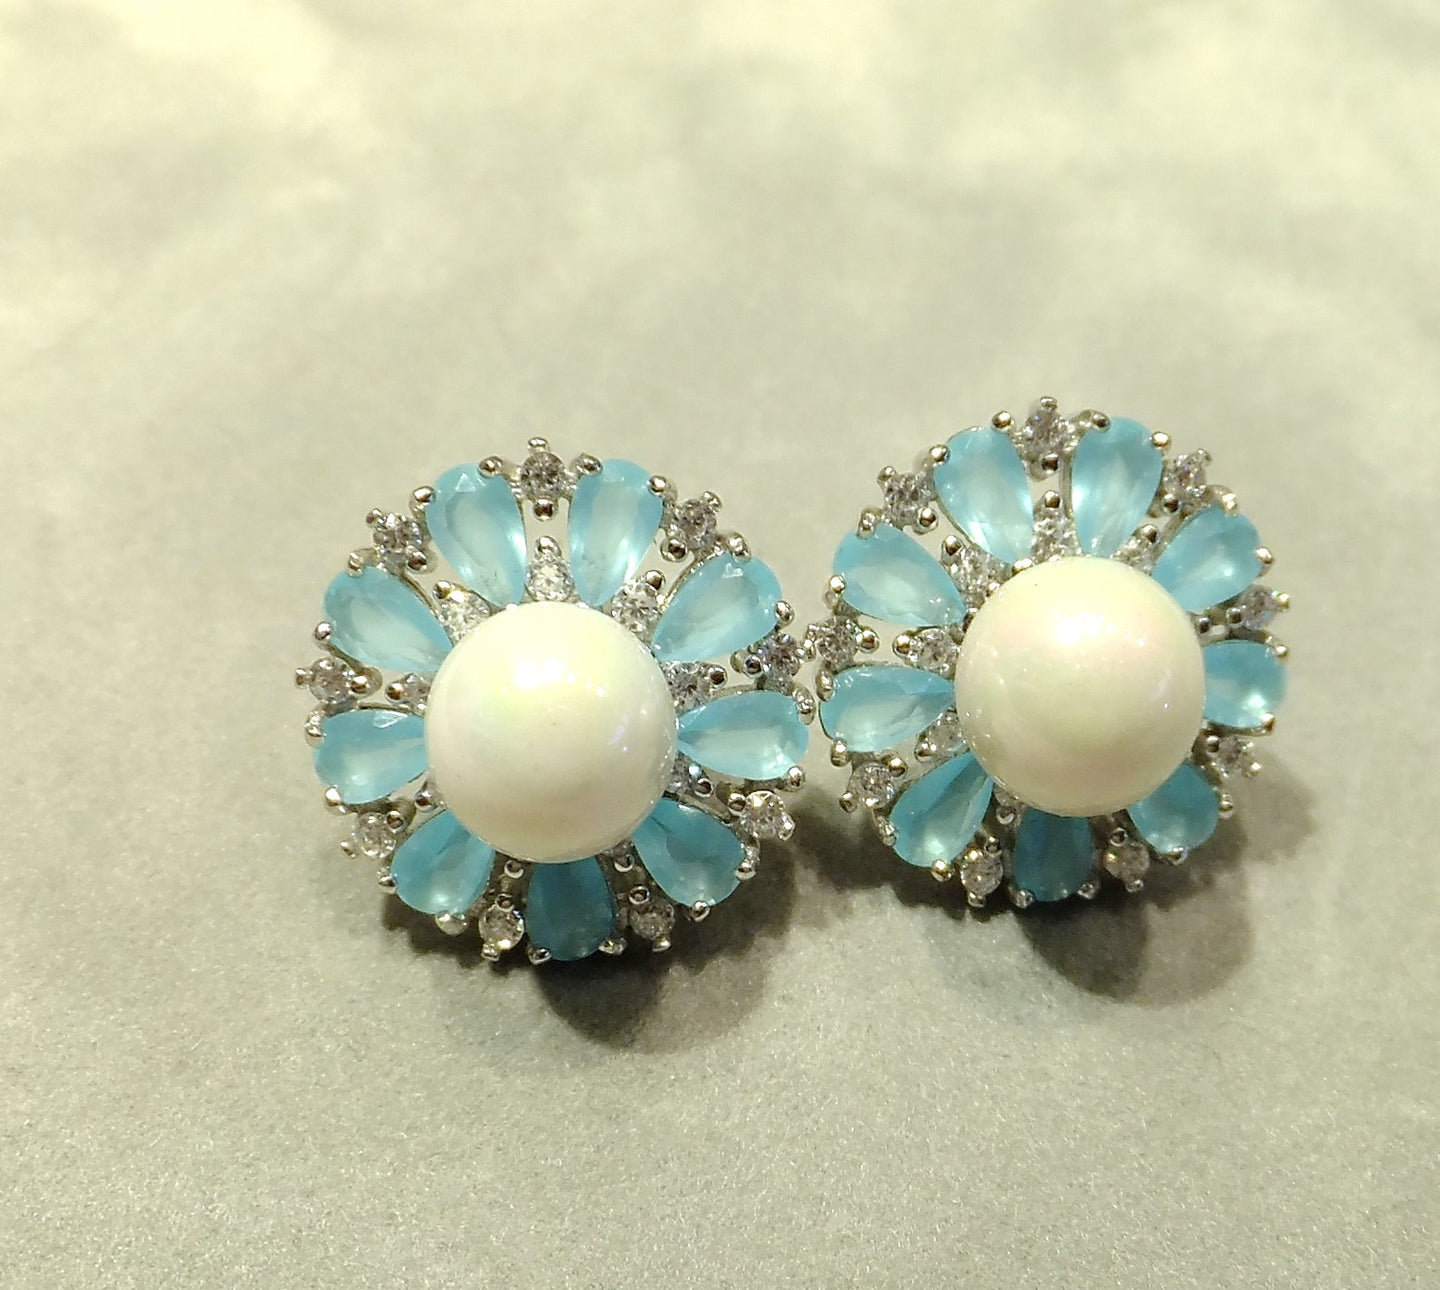 Flower earrings with pearl